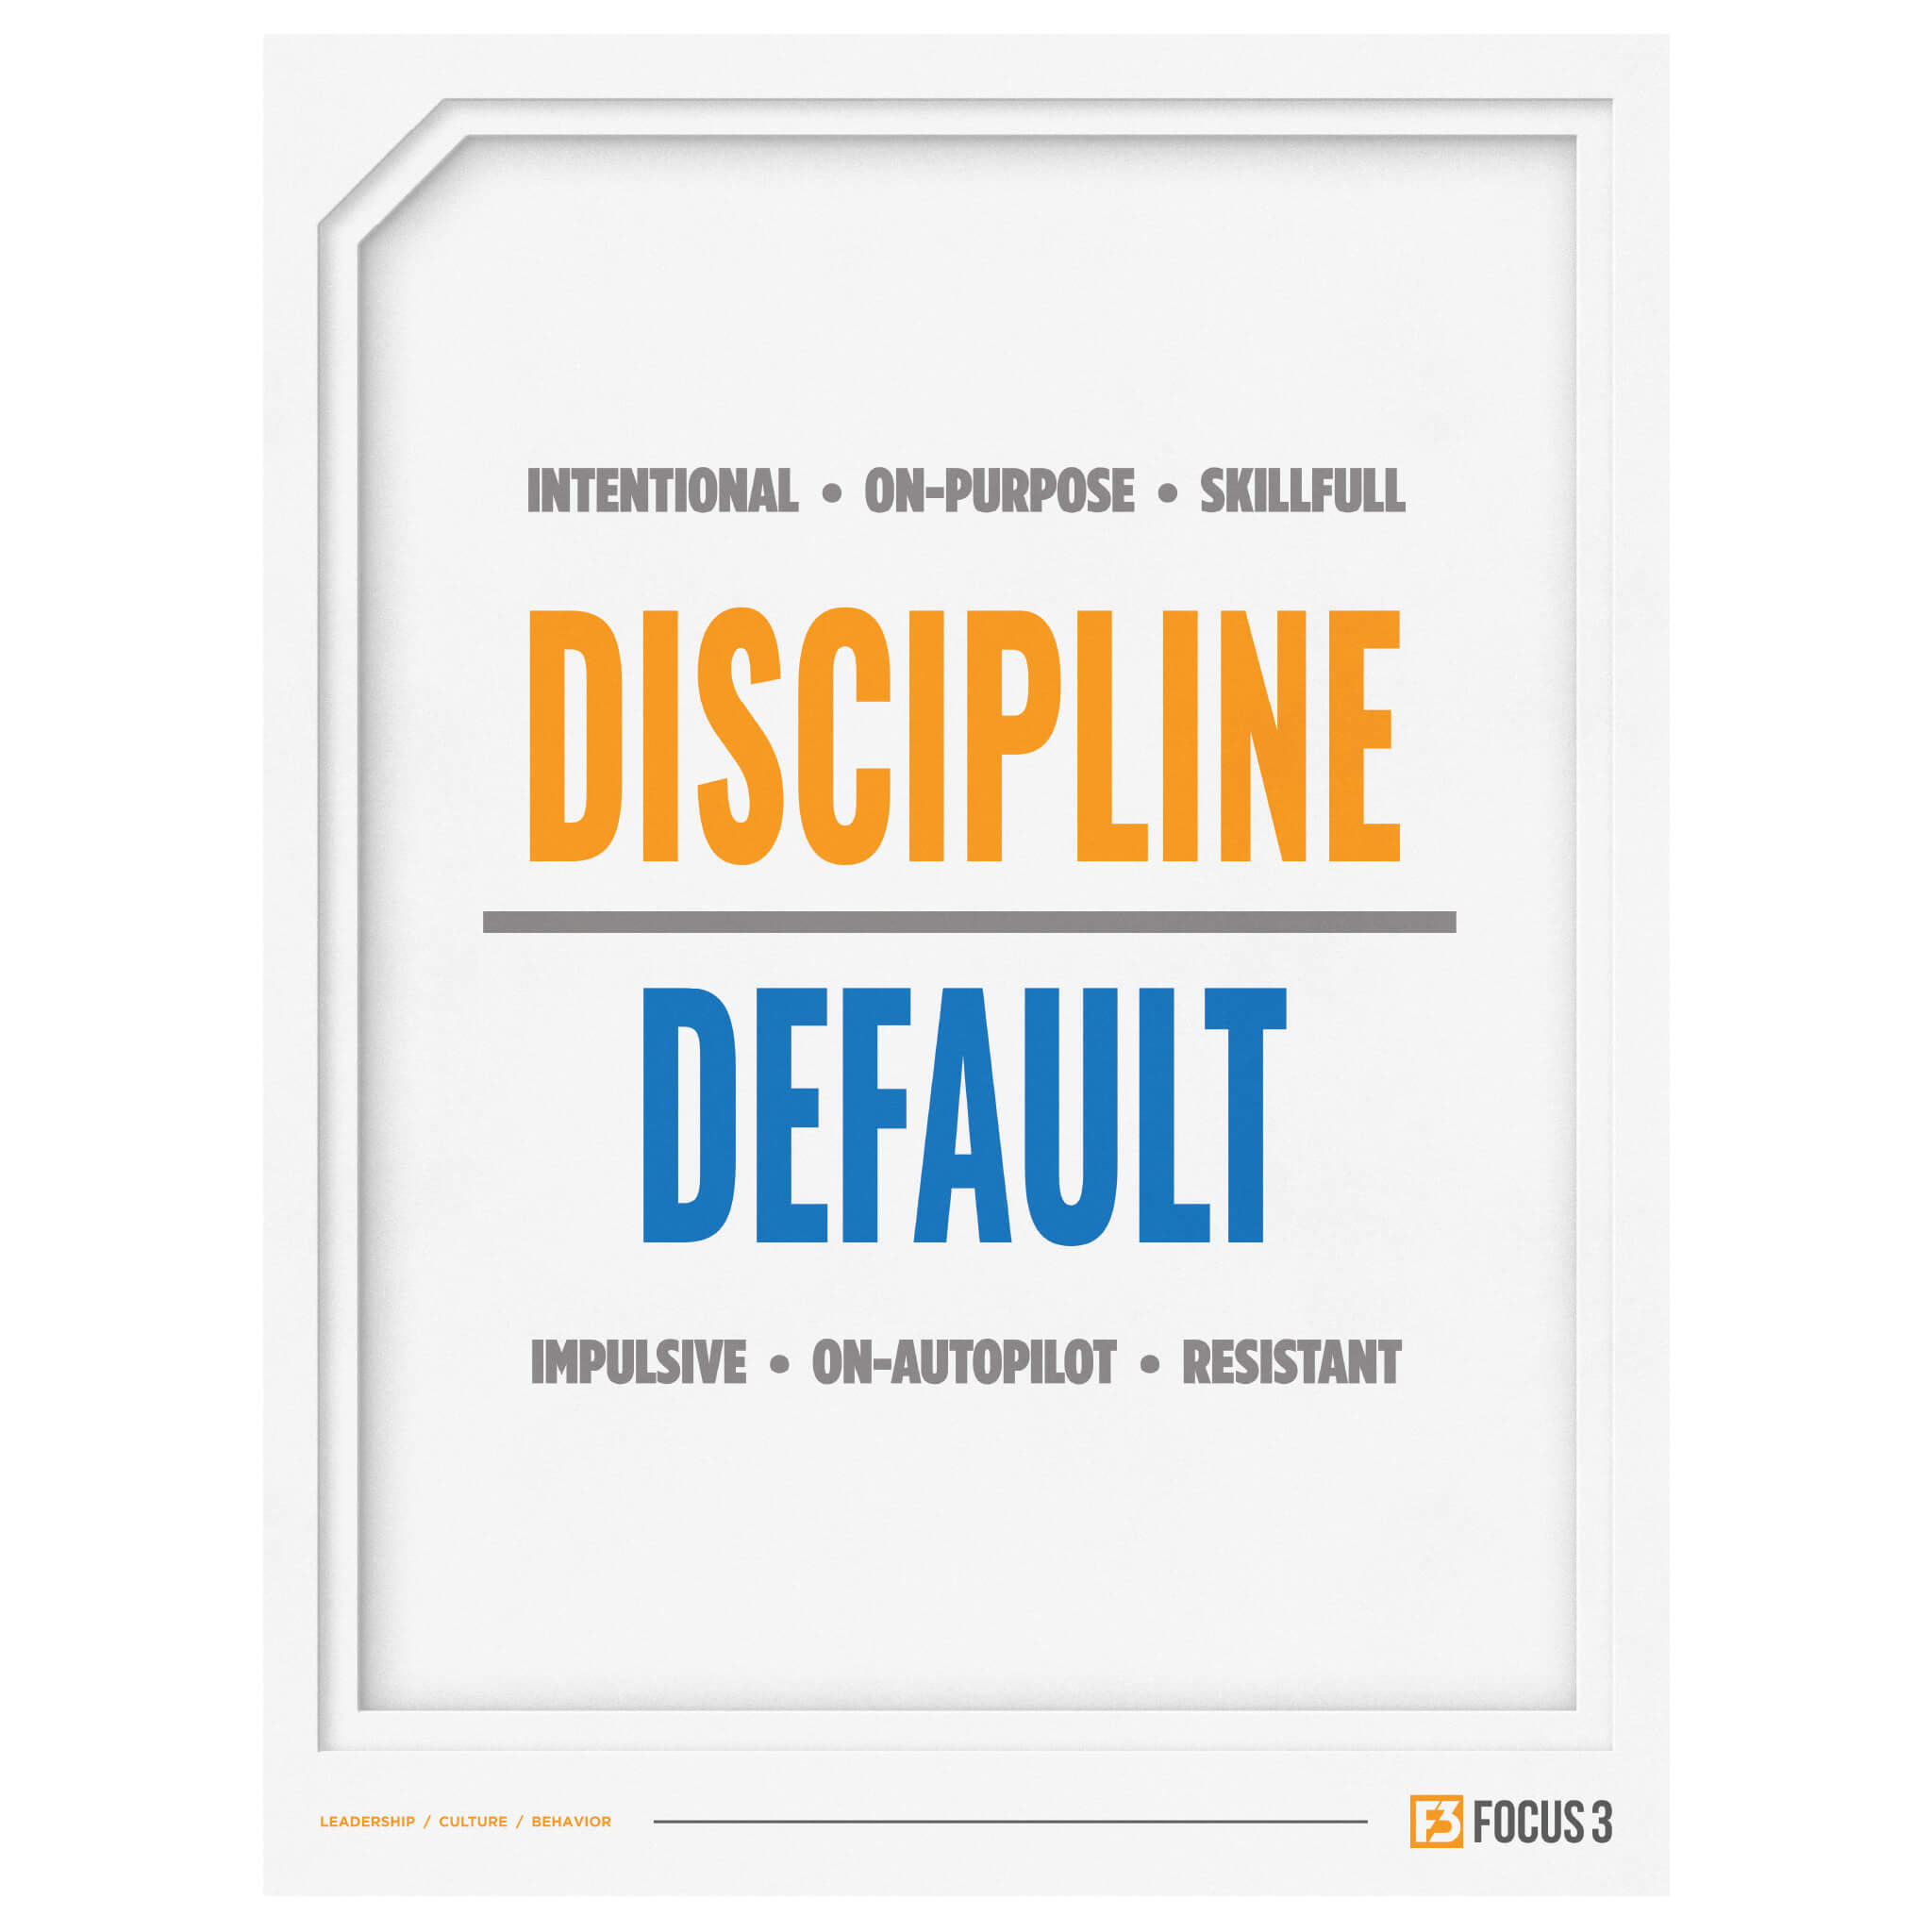 Discipline Over Default Poster